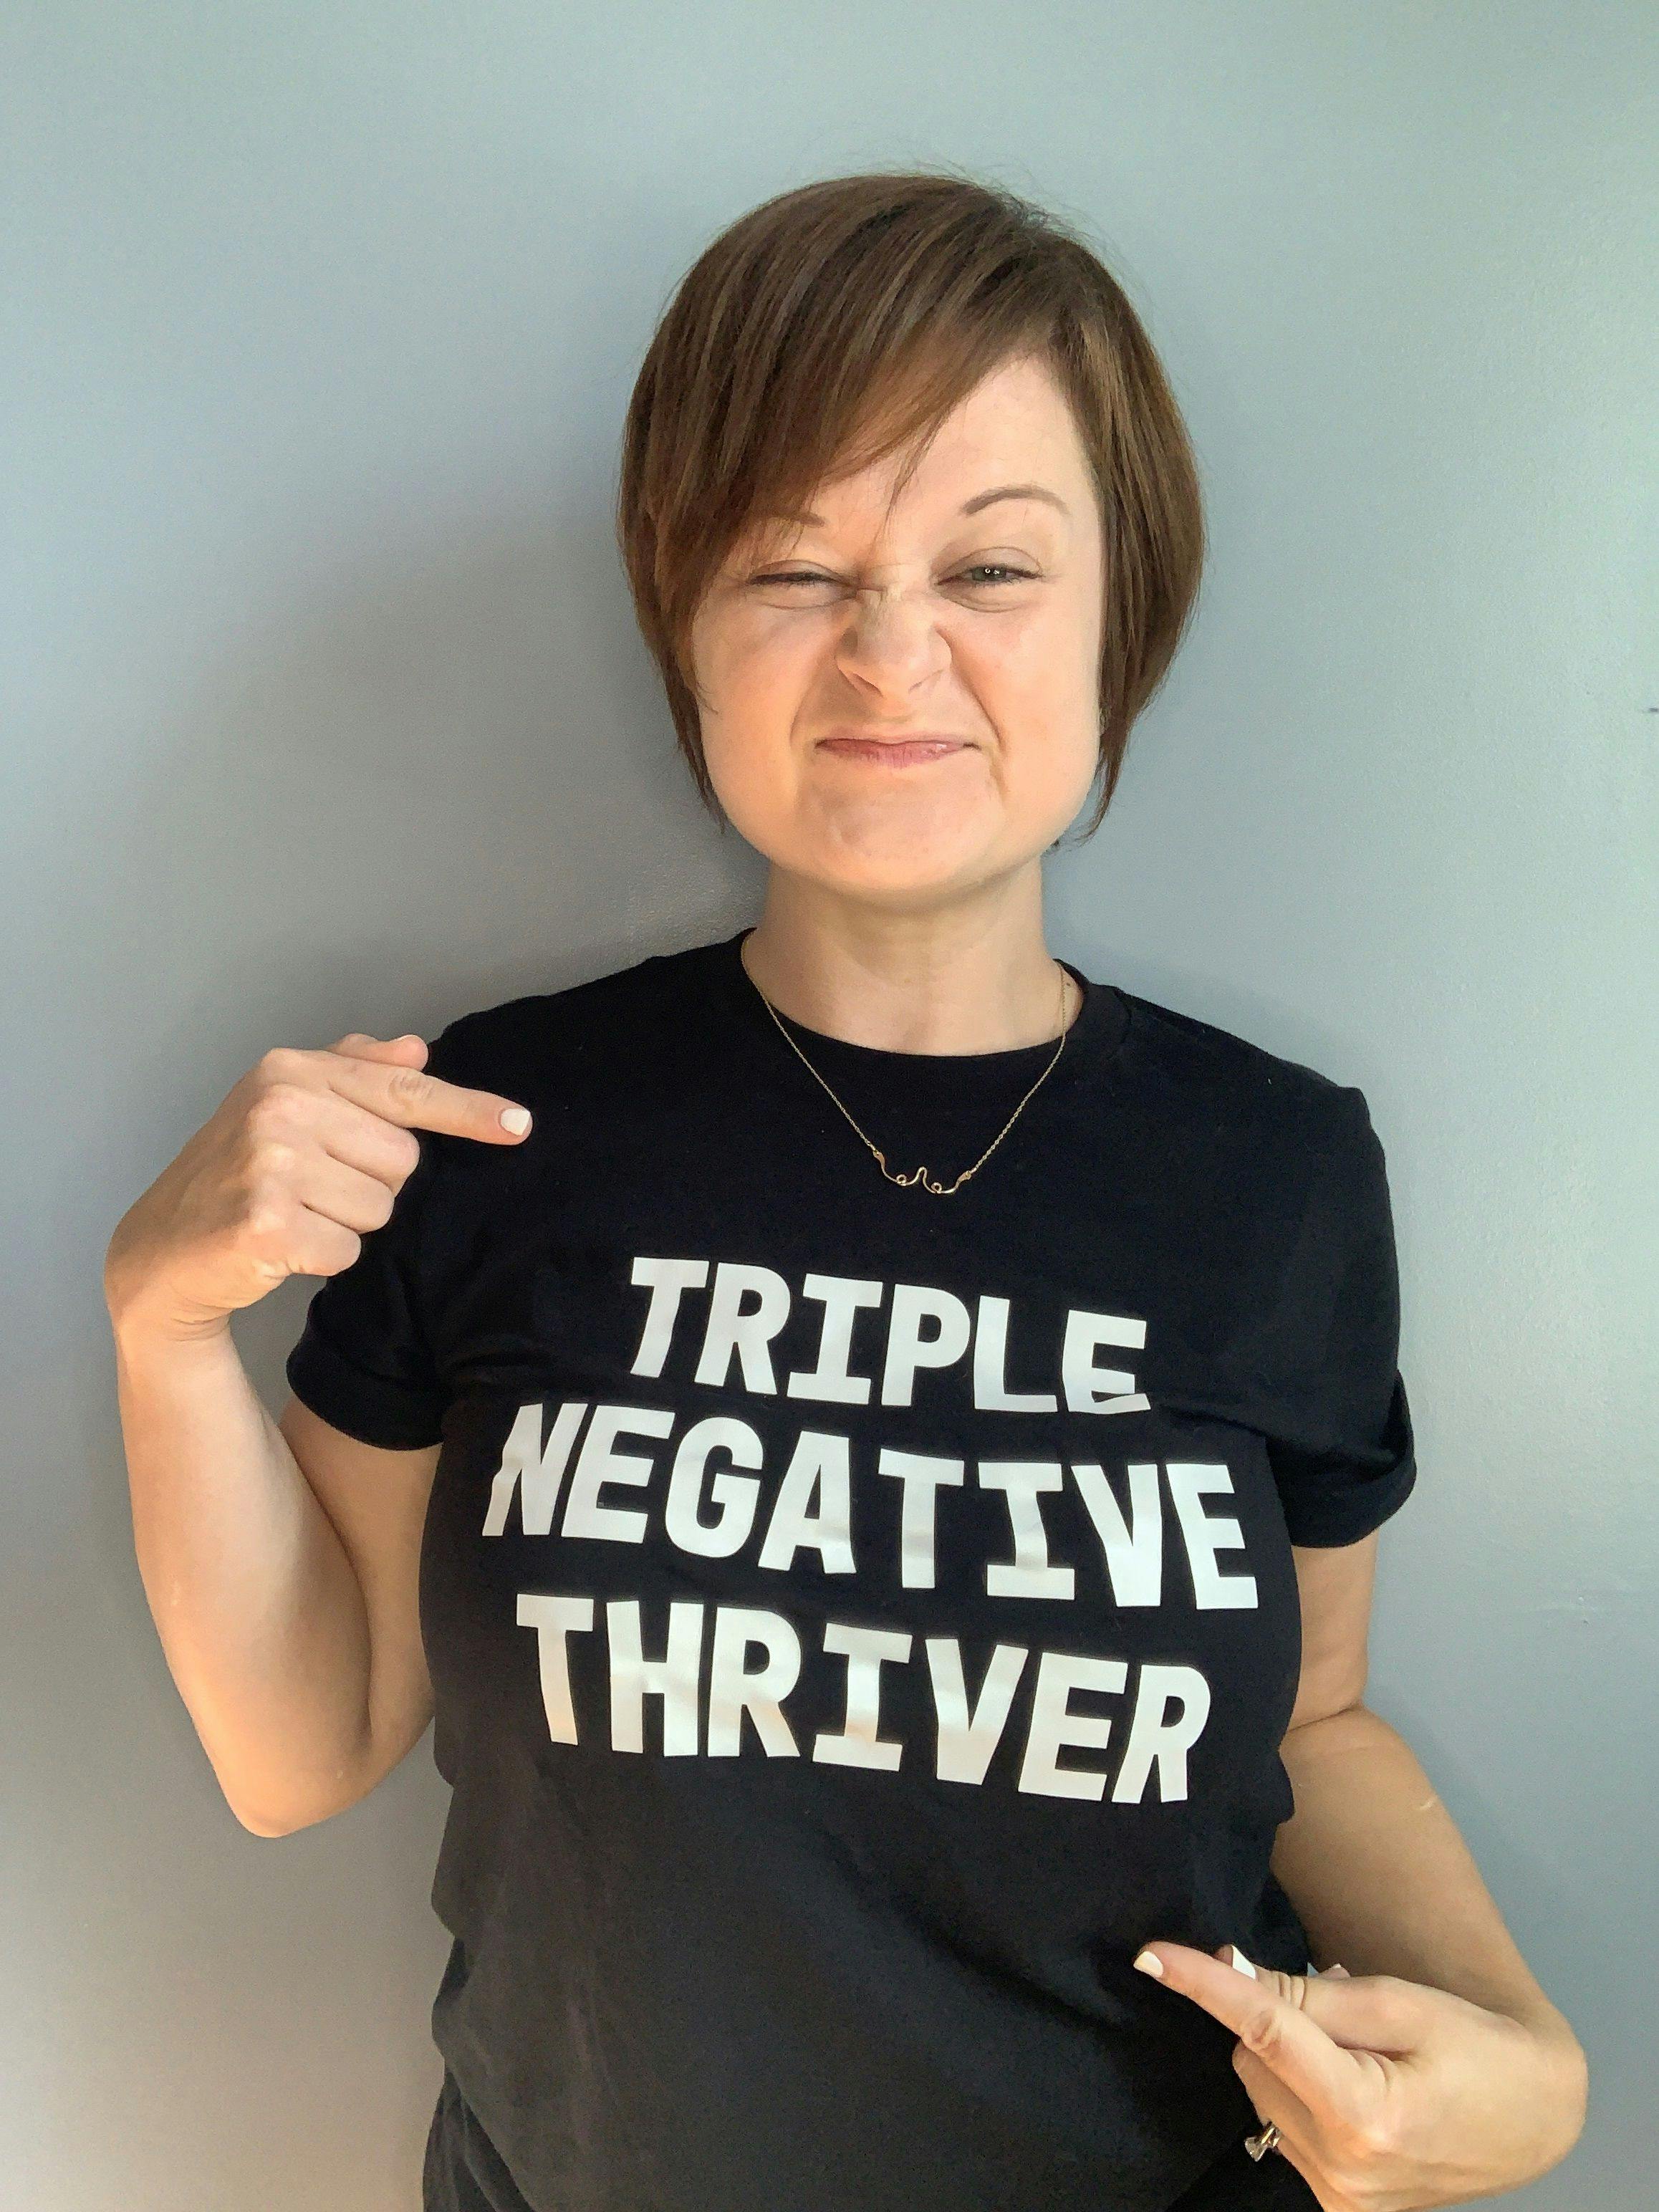 Kelly Thomas wearing a black shirt that says "TRIPLE NEGATIVE THRIVER"